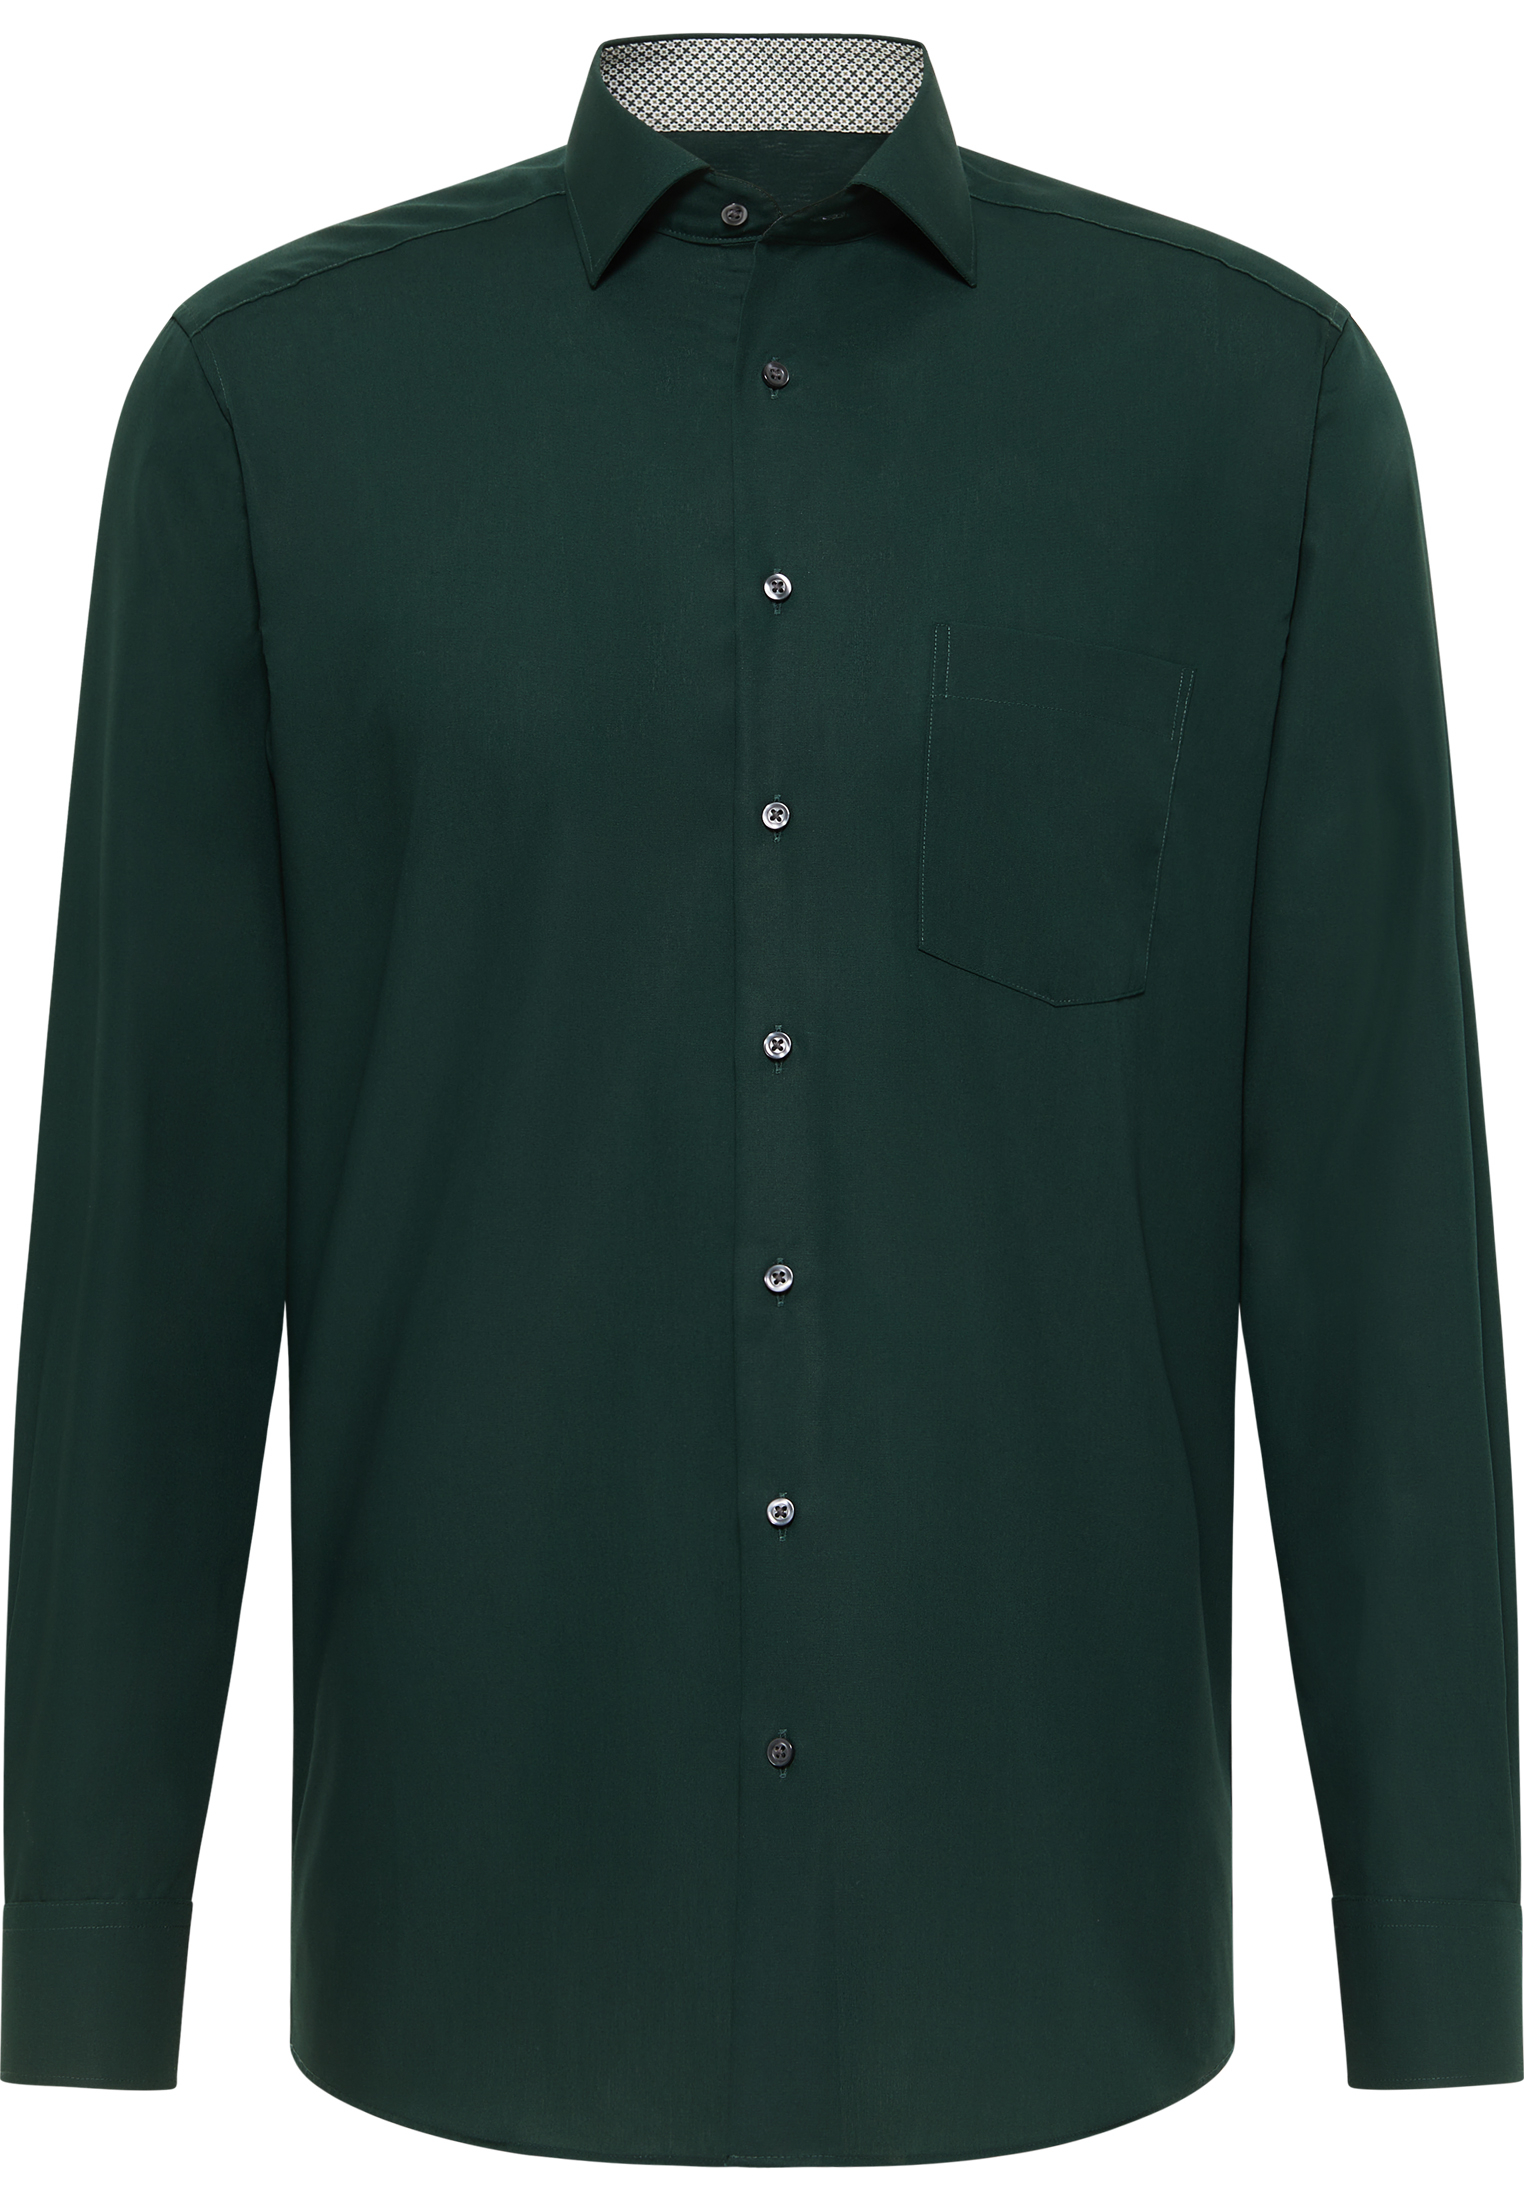 MODERN FIT Original Shirt in jade vlakte